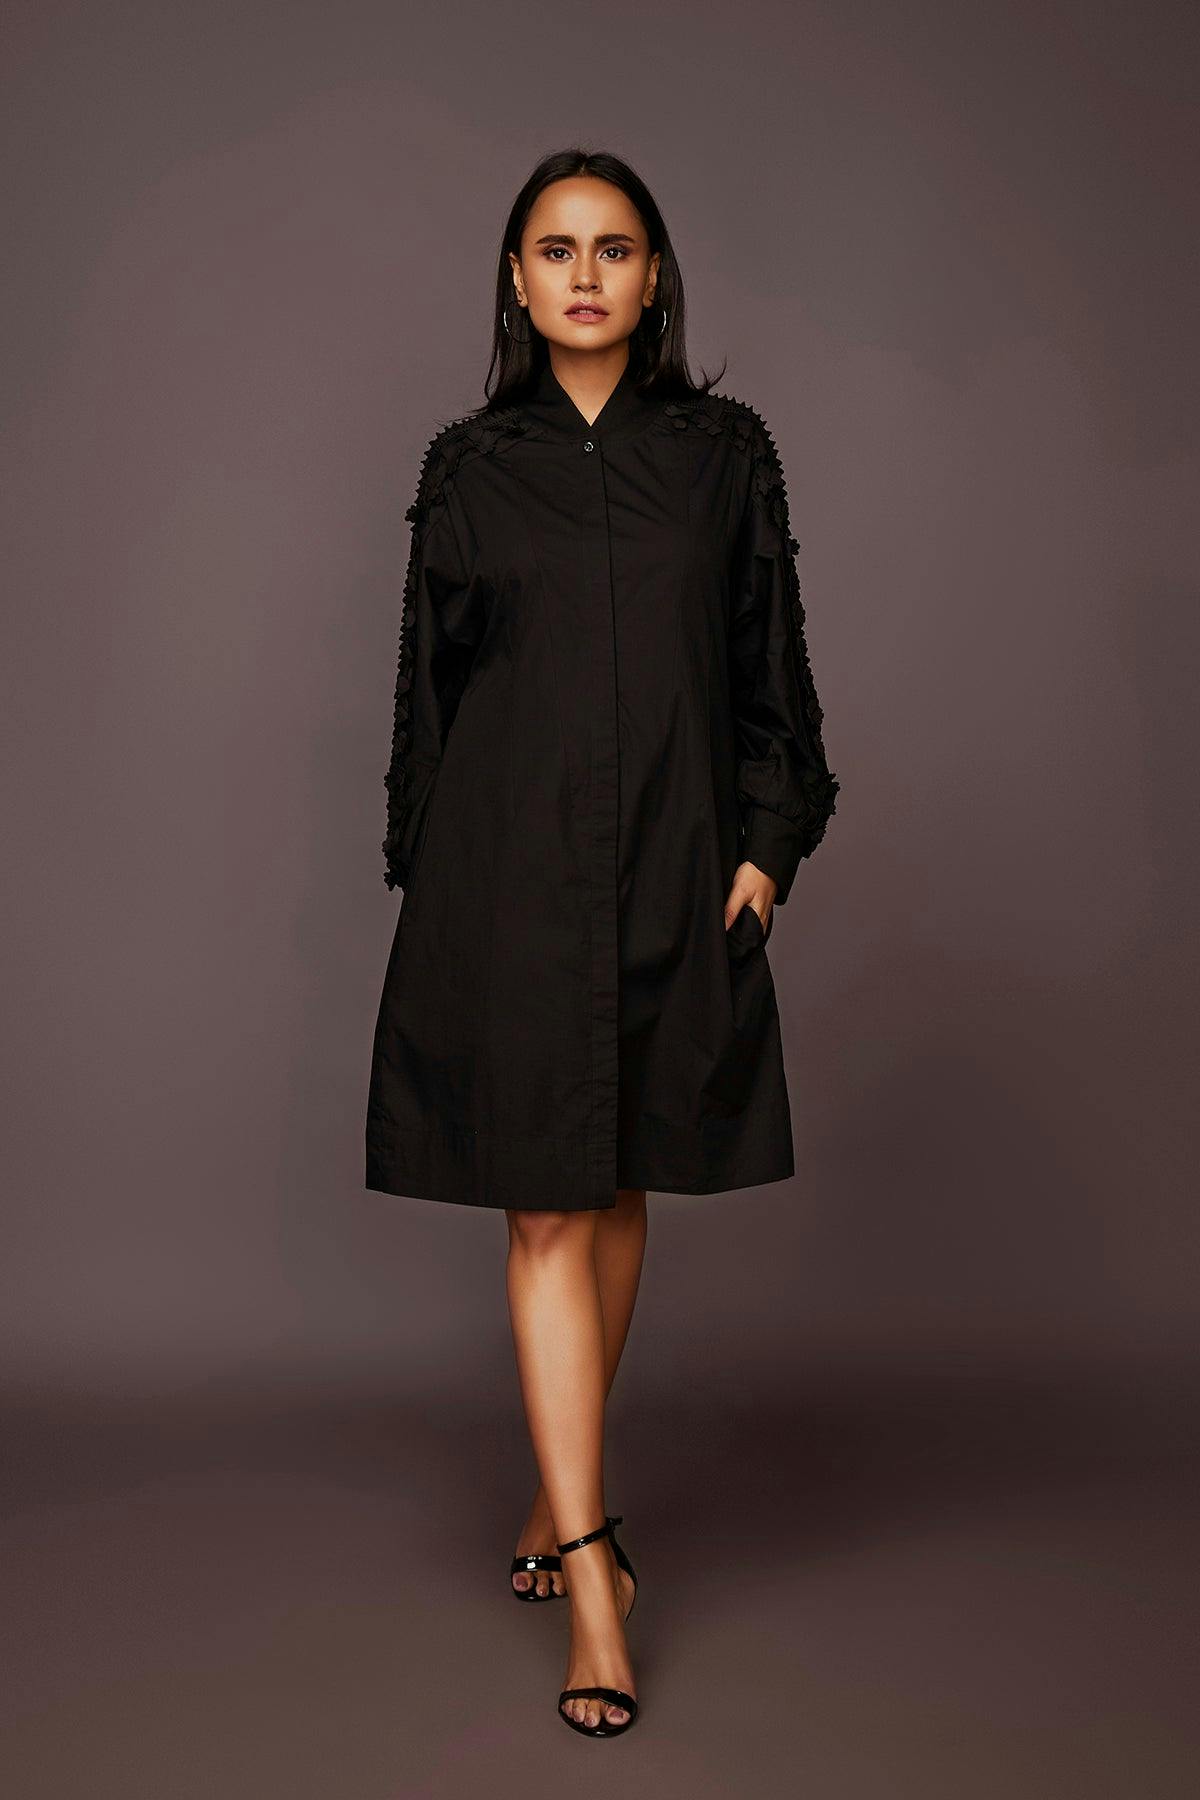 NN-1119 ::: Black A-Line Dress With 3D Cutwork, a product by Deepika Arora